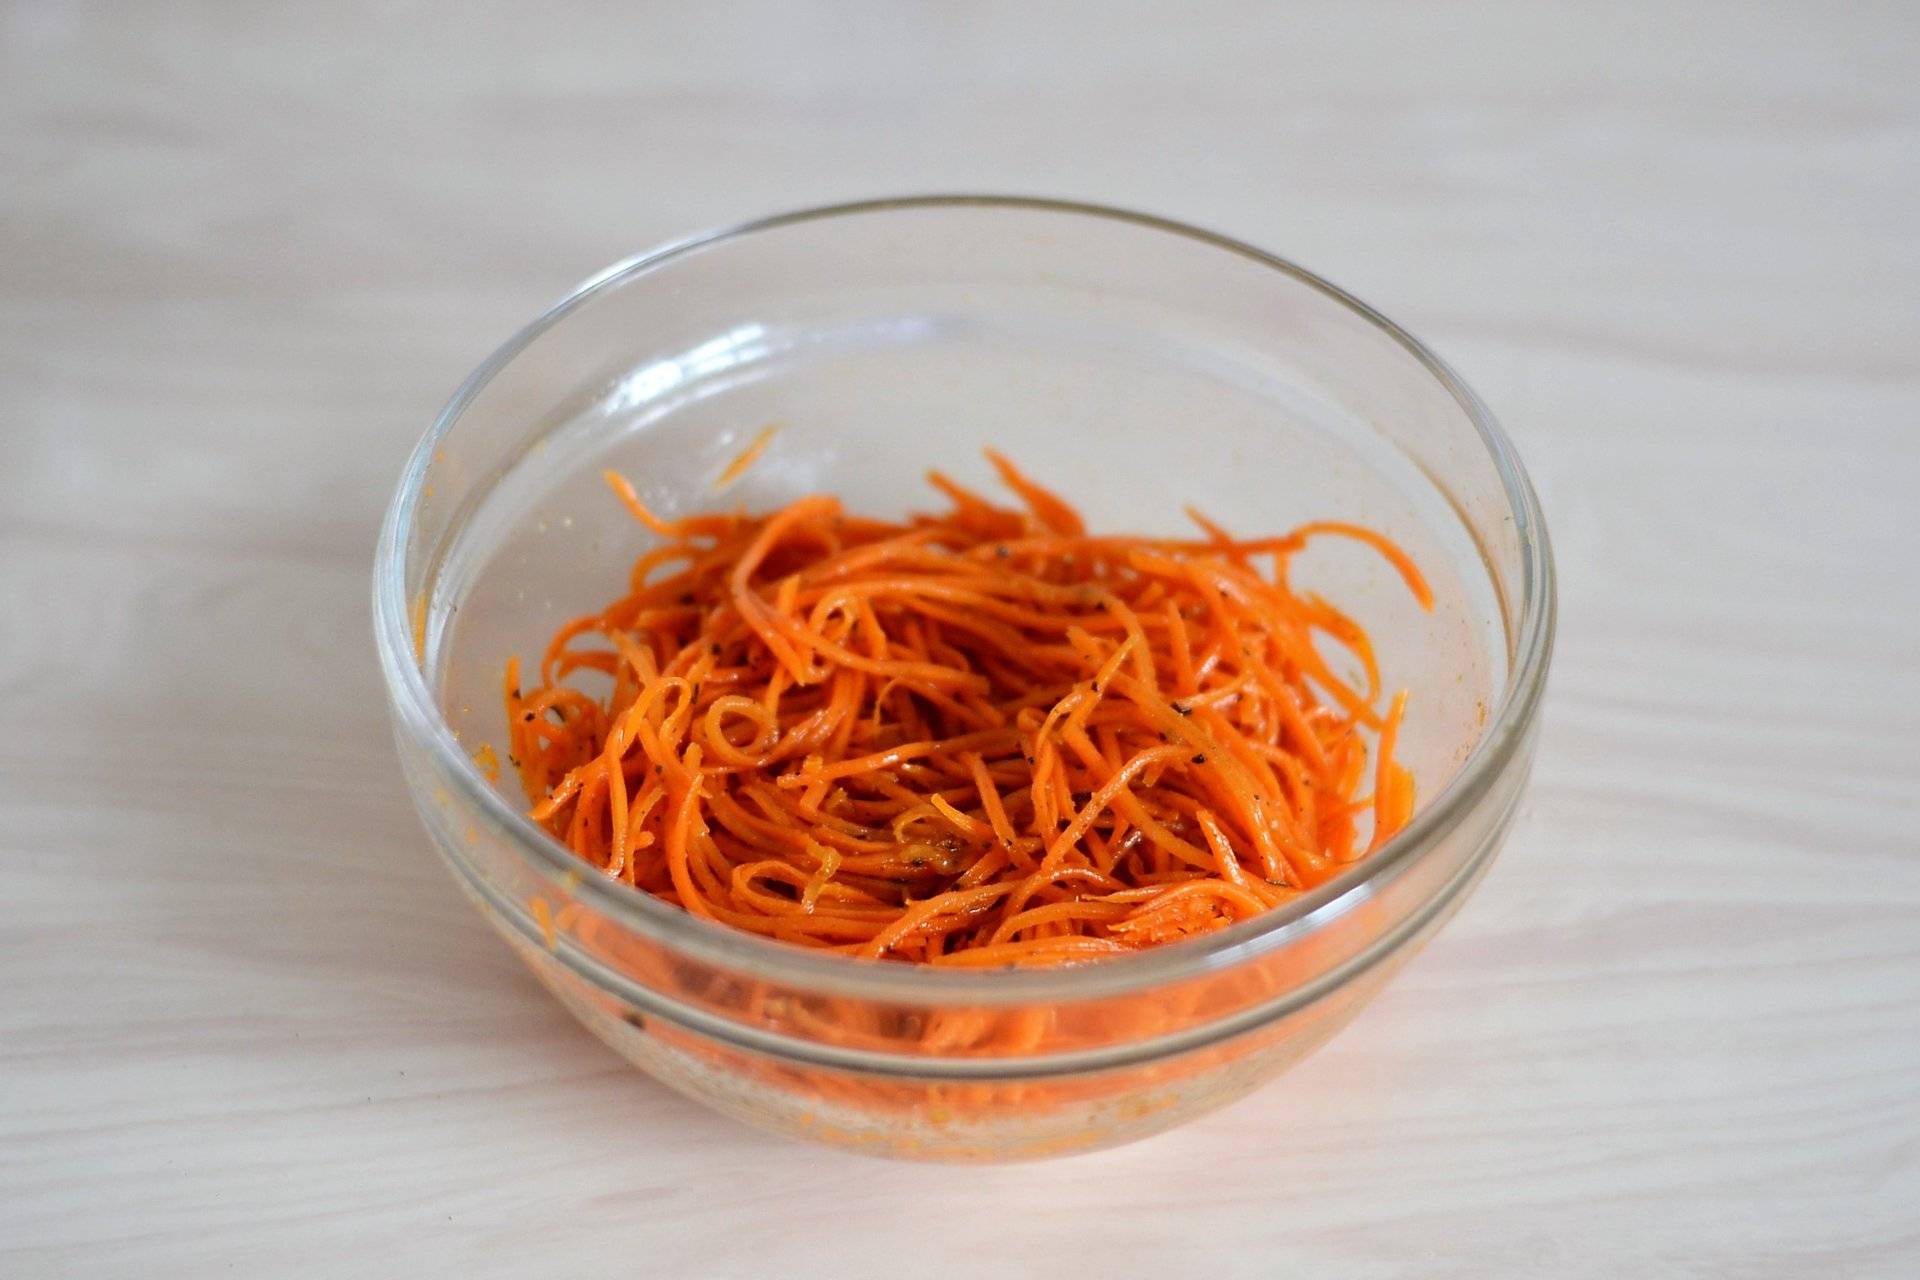 Рецепты маринования моркови по-корейски в домашних условиях на зиму в банки со стерилизацией и без